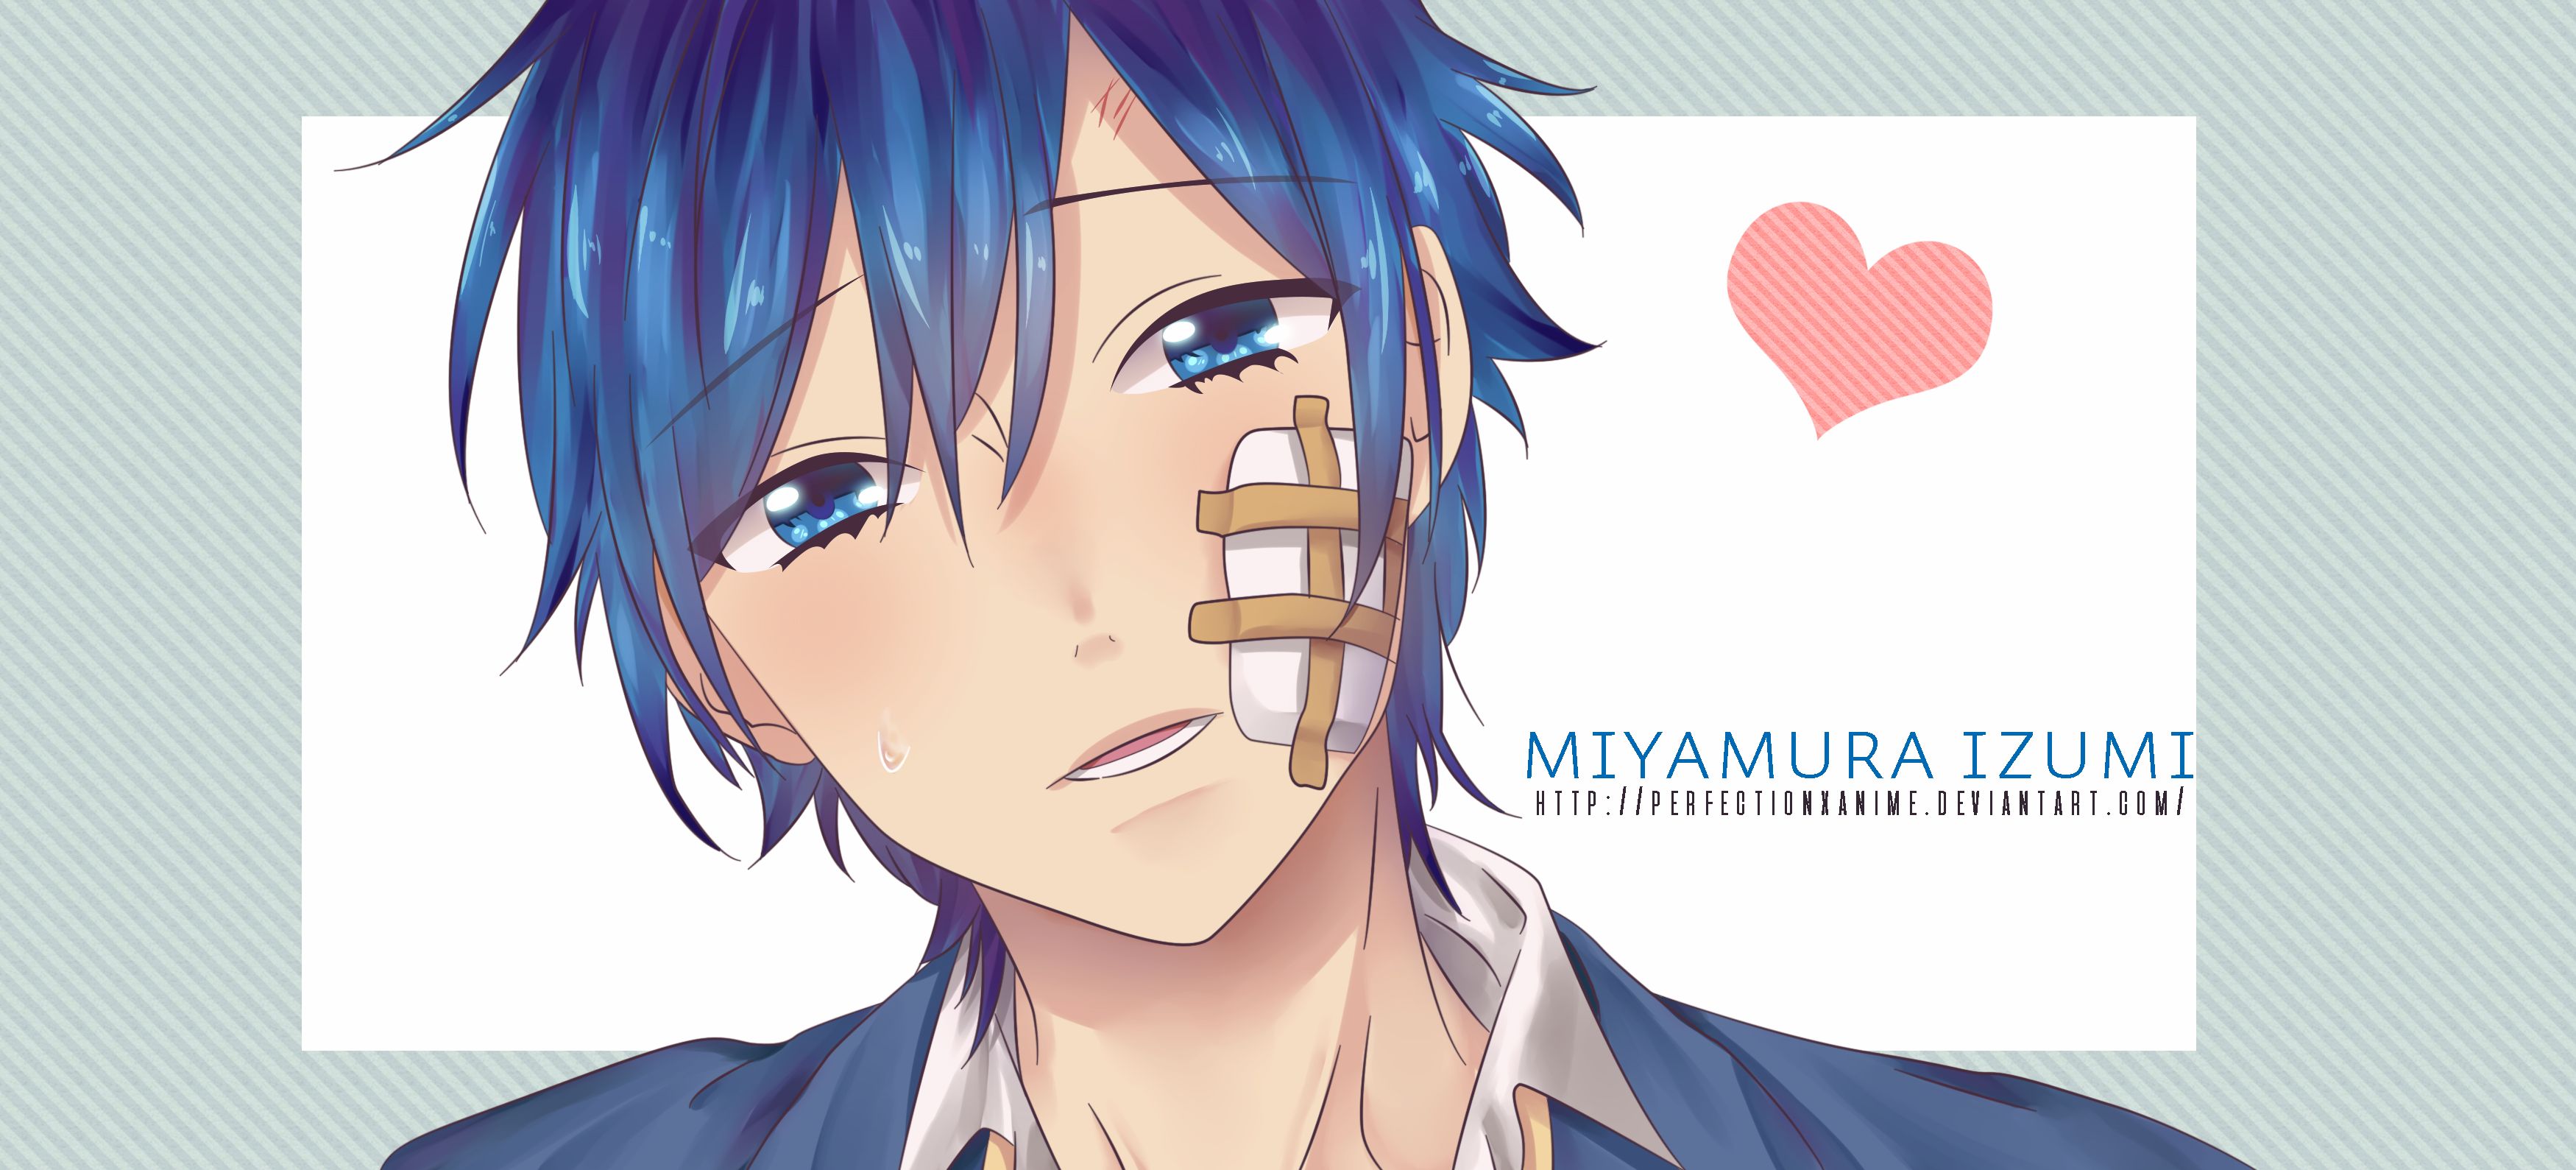 miyamura users on Tumblr